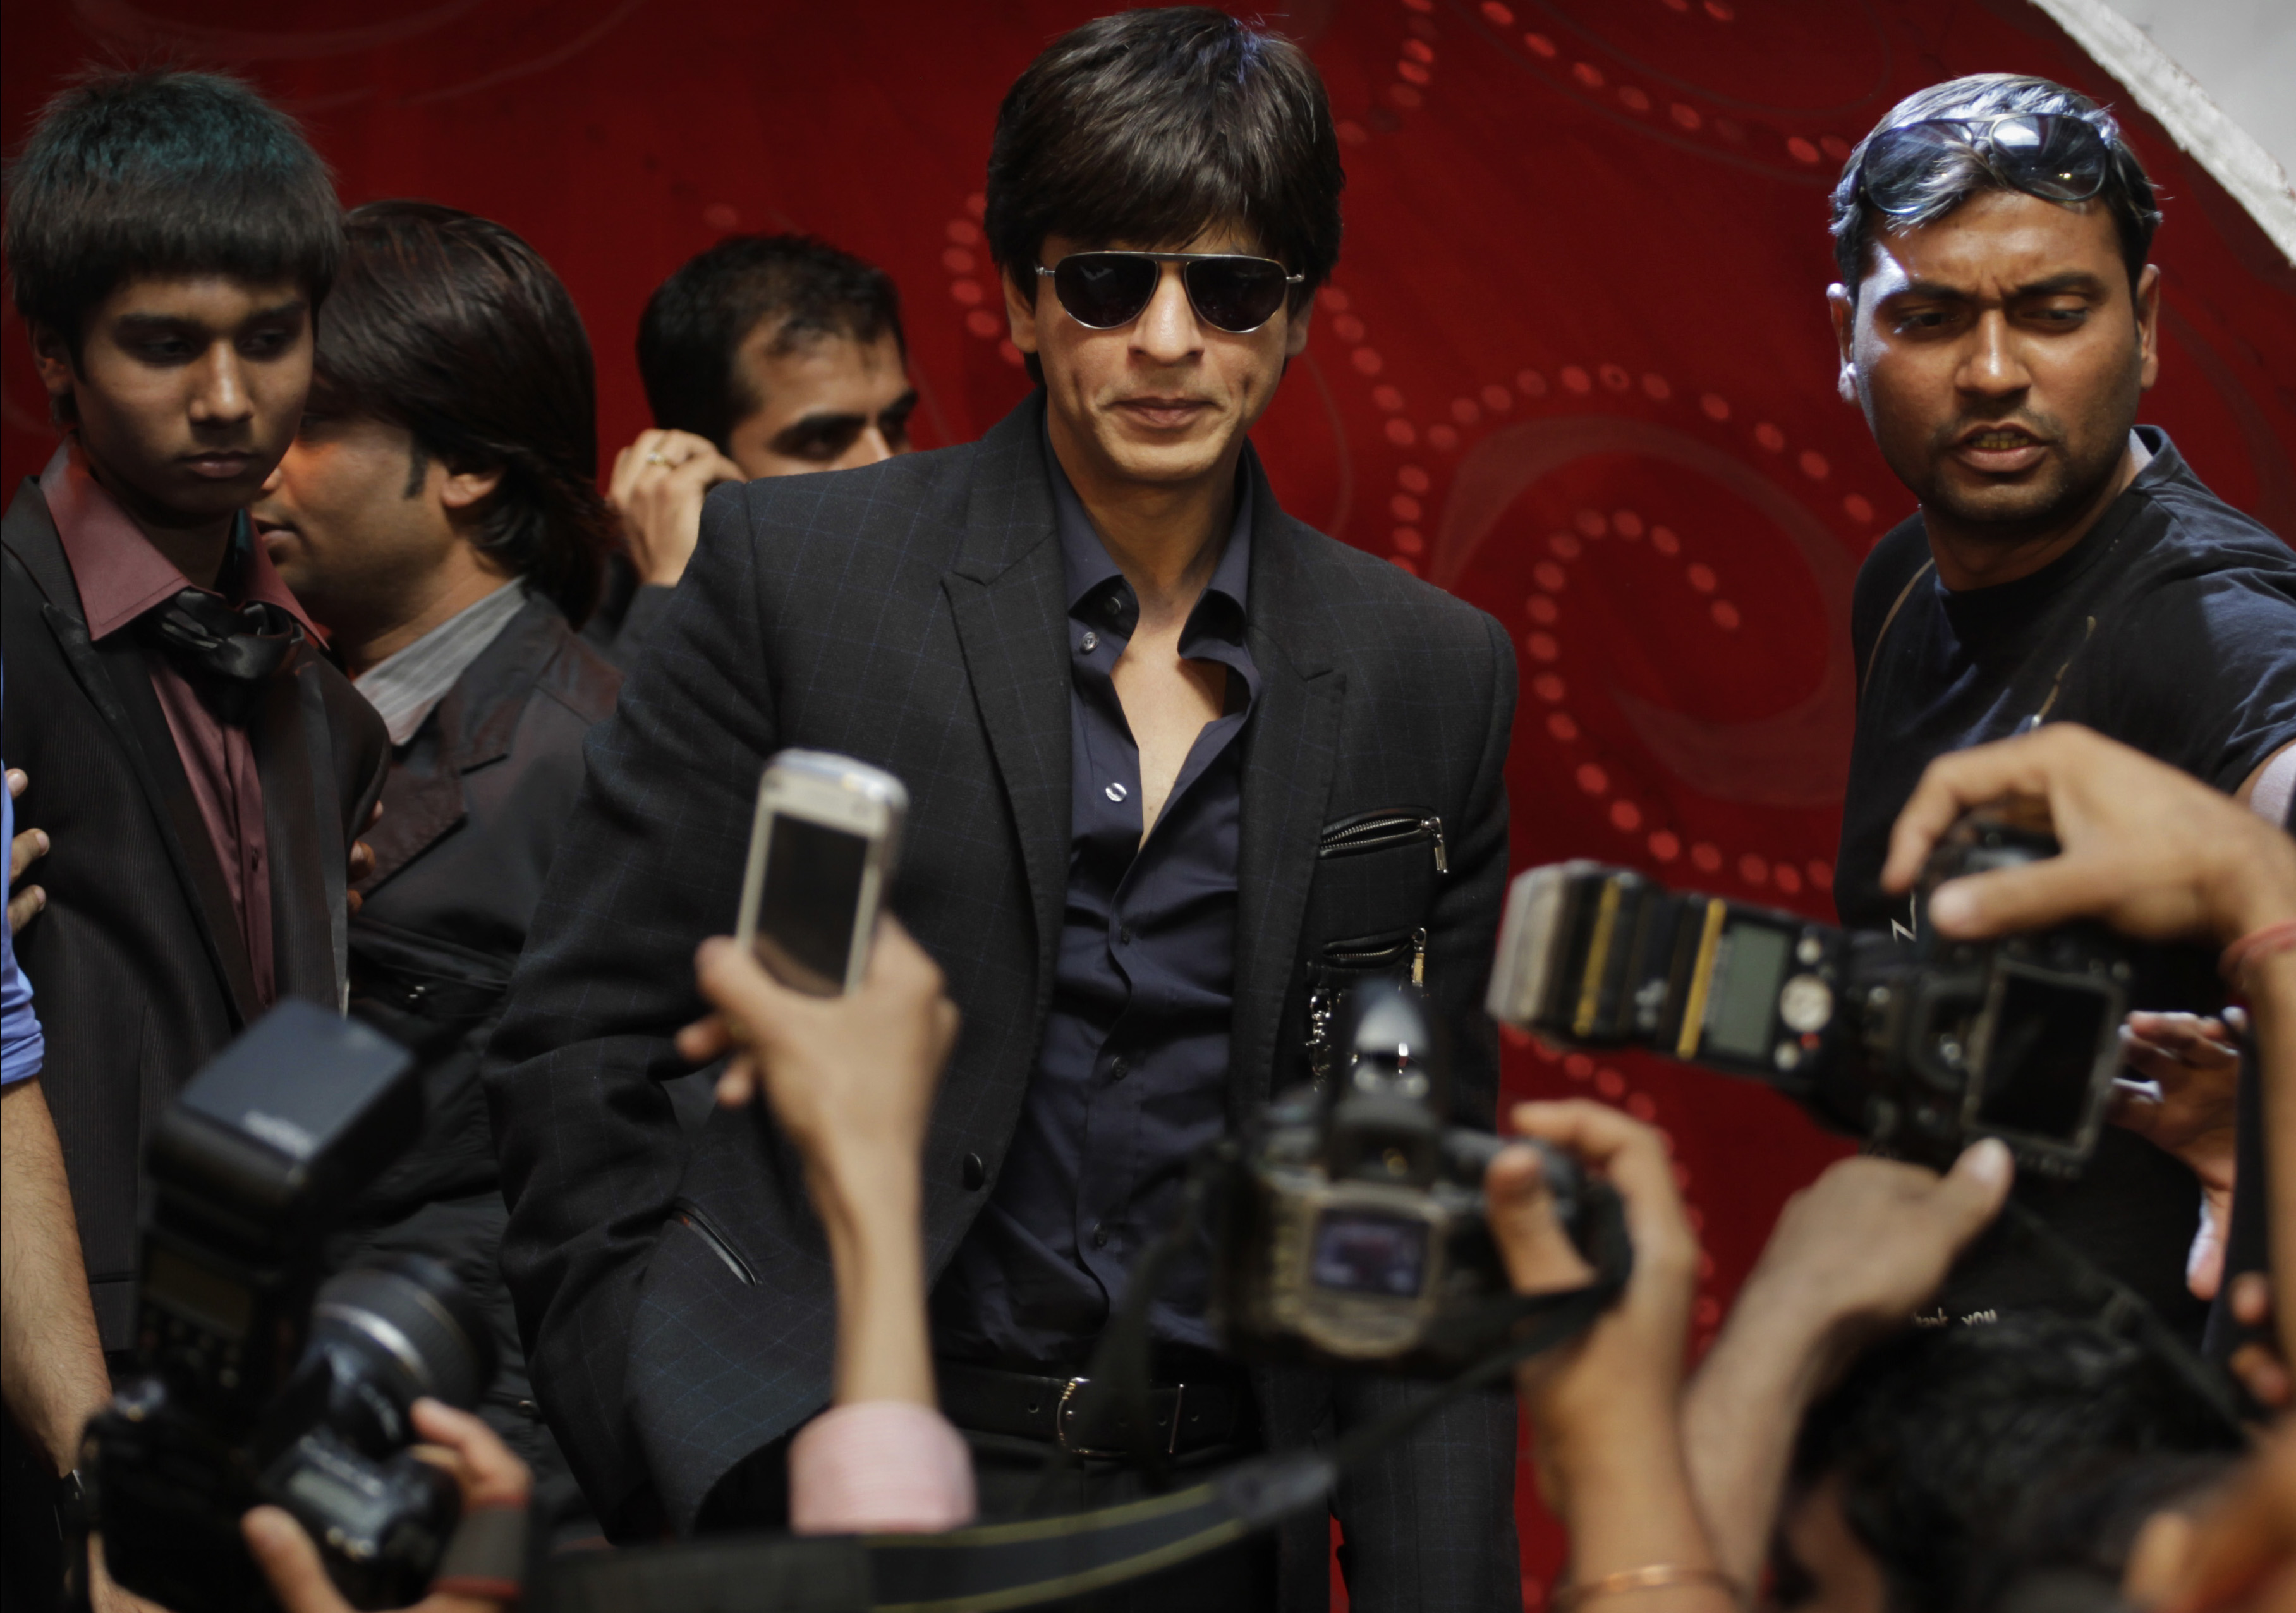 Shahrukh Khan såg nakenbilder spridas bland personalen.